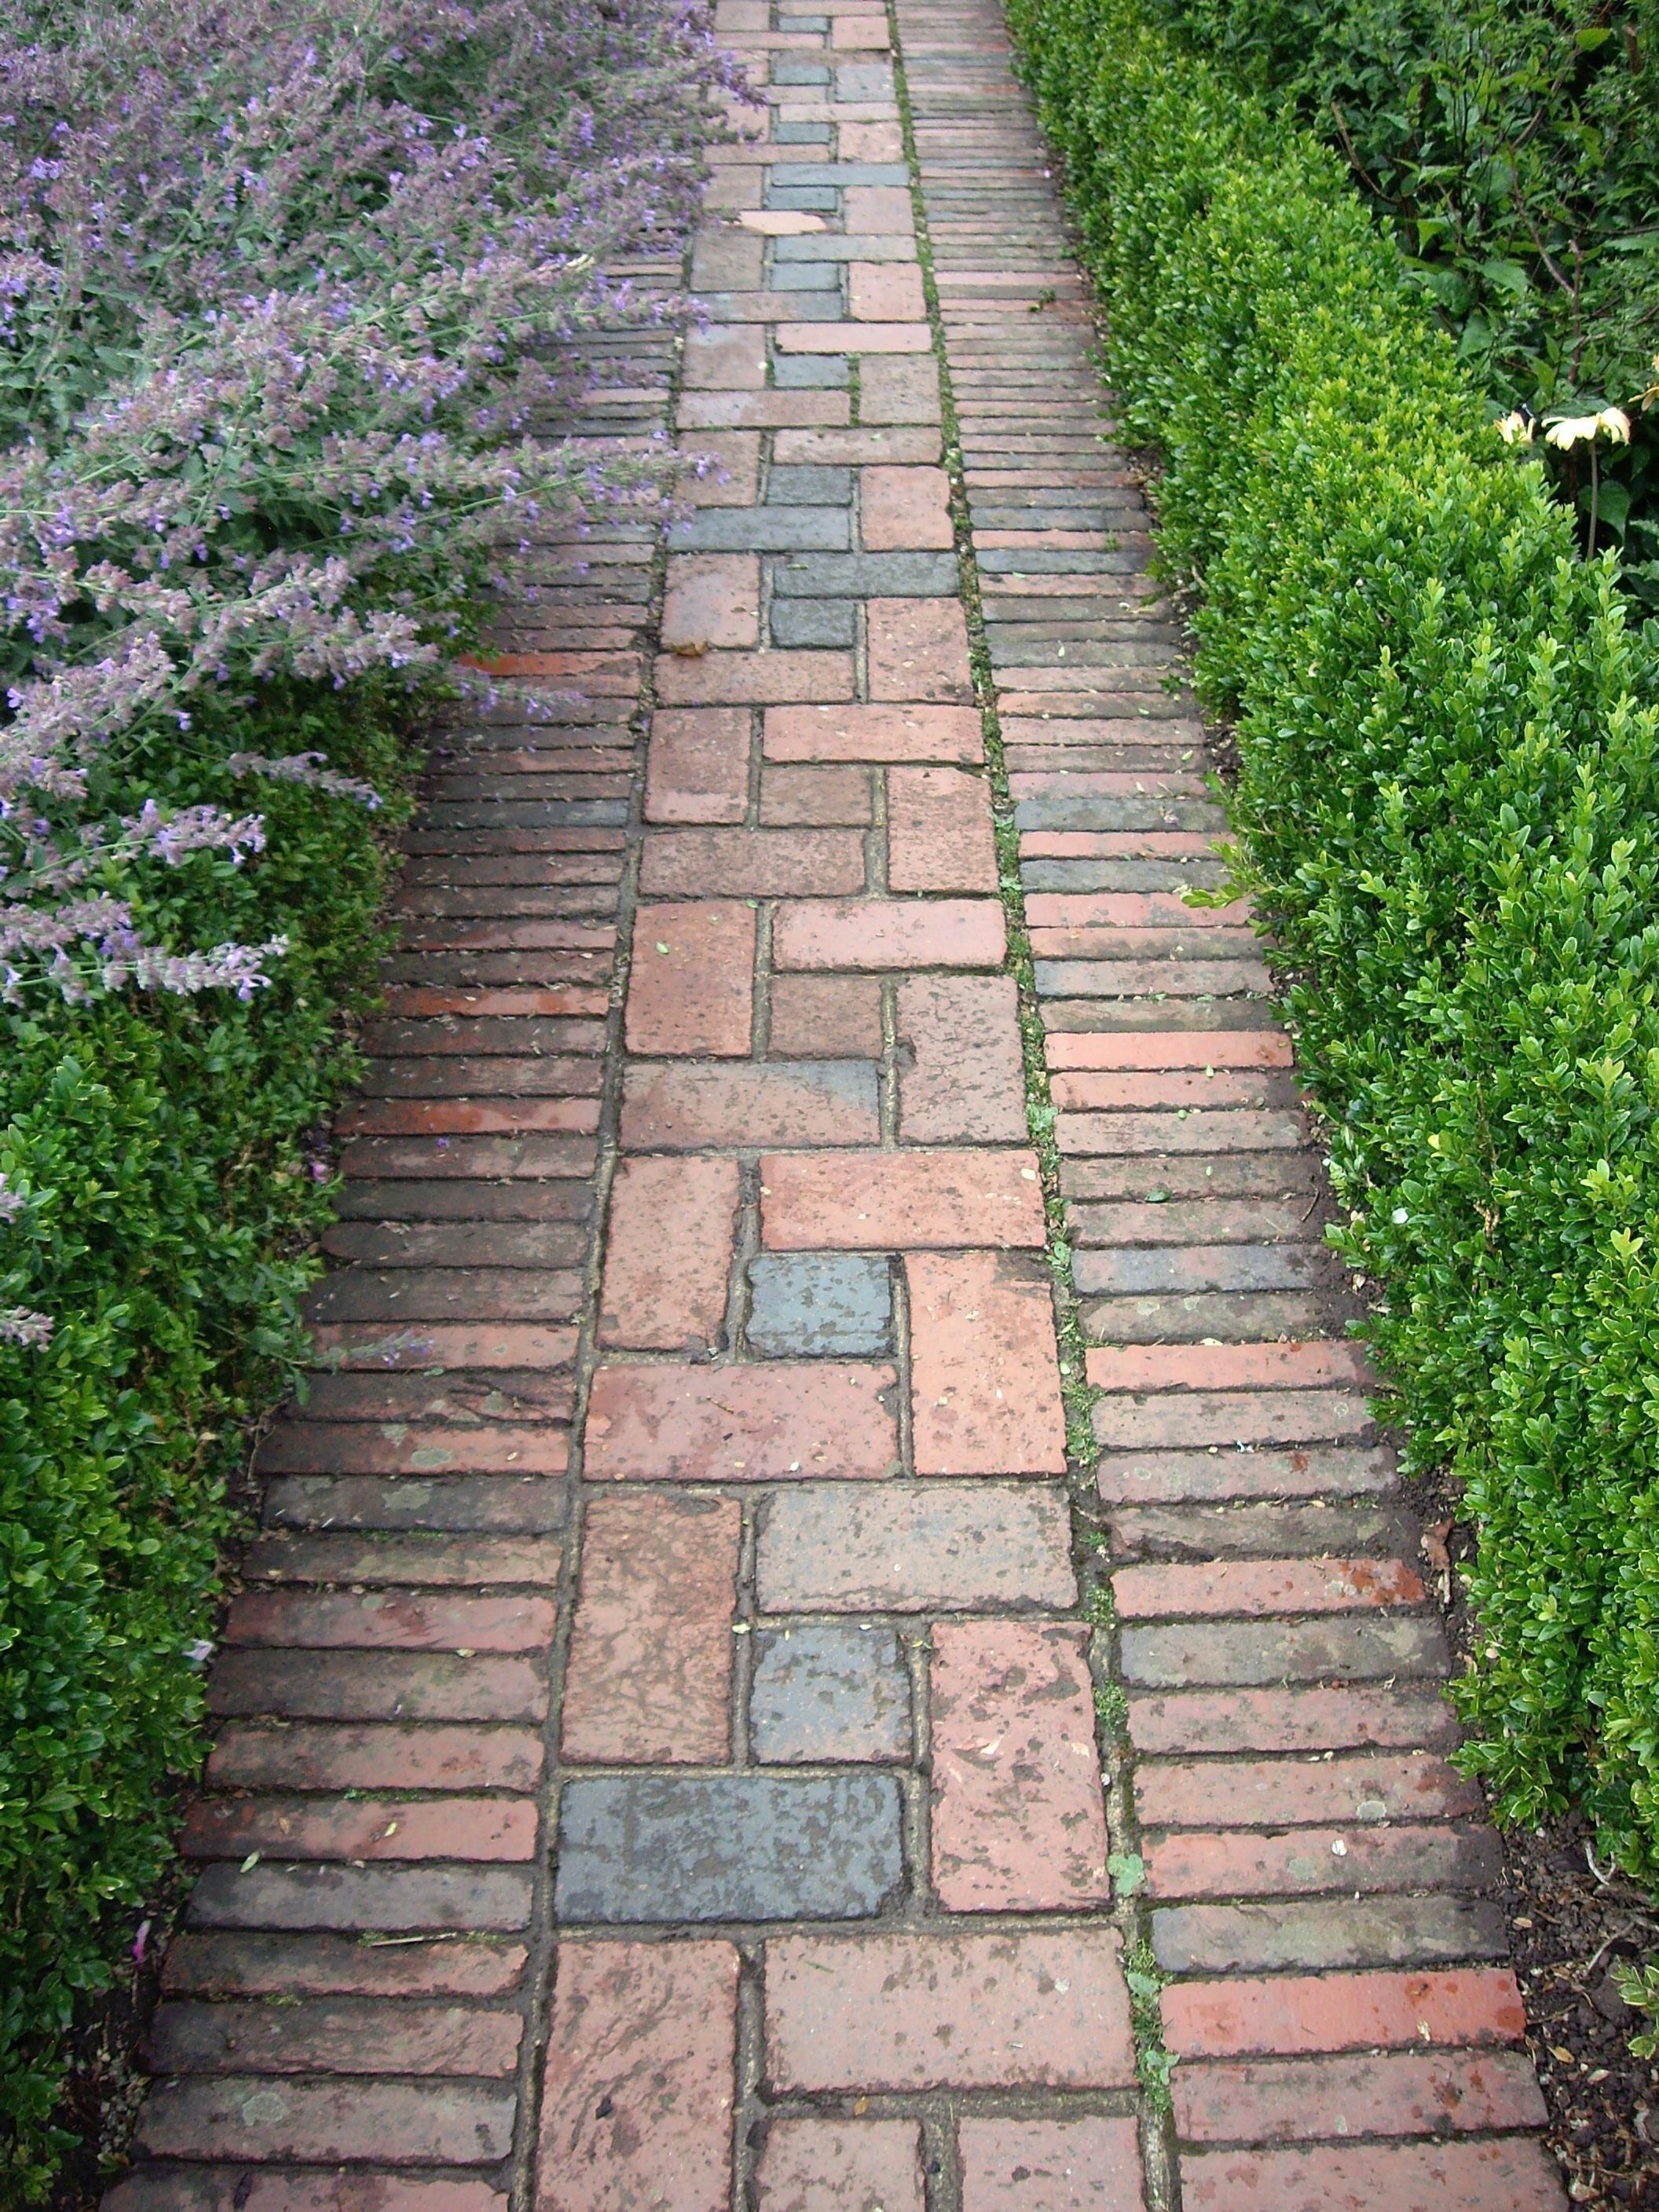 38 DIY Garden Paths and Walkways Ideas for Backyard -   22 chodnik garden path ideas